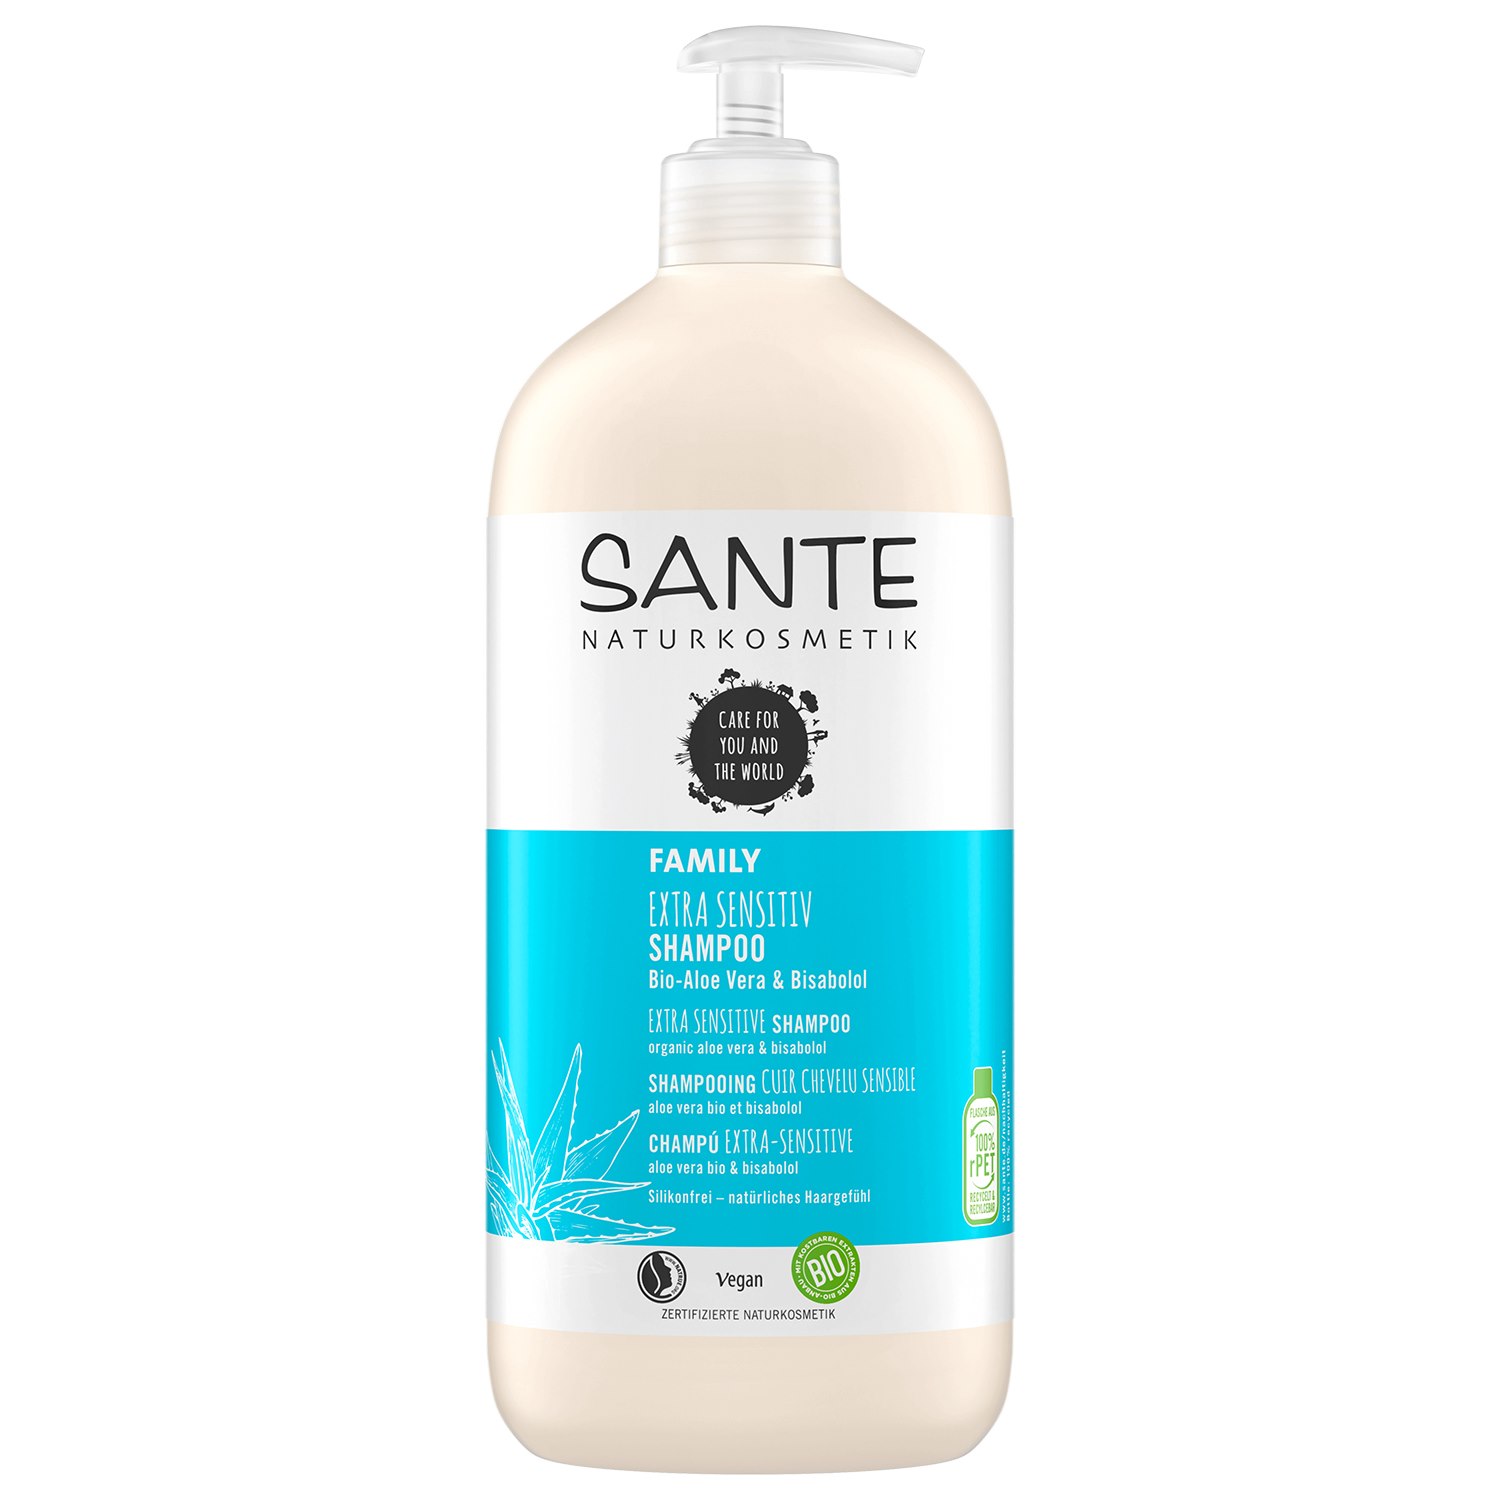 Sante Extra Sensitive & Vera Shampoo ml 950 Bisabolol, Aloe